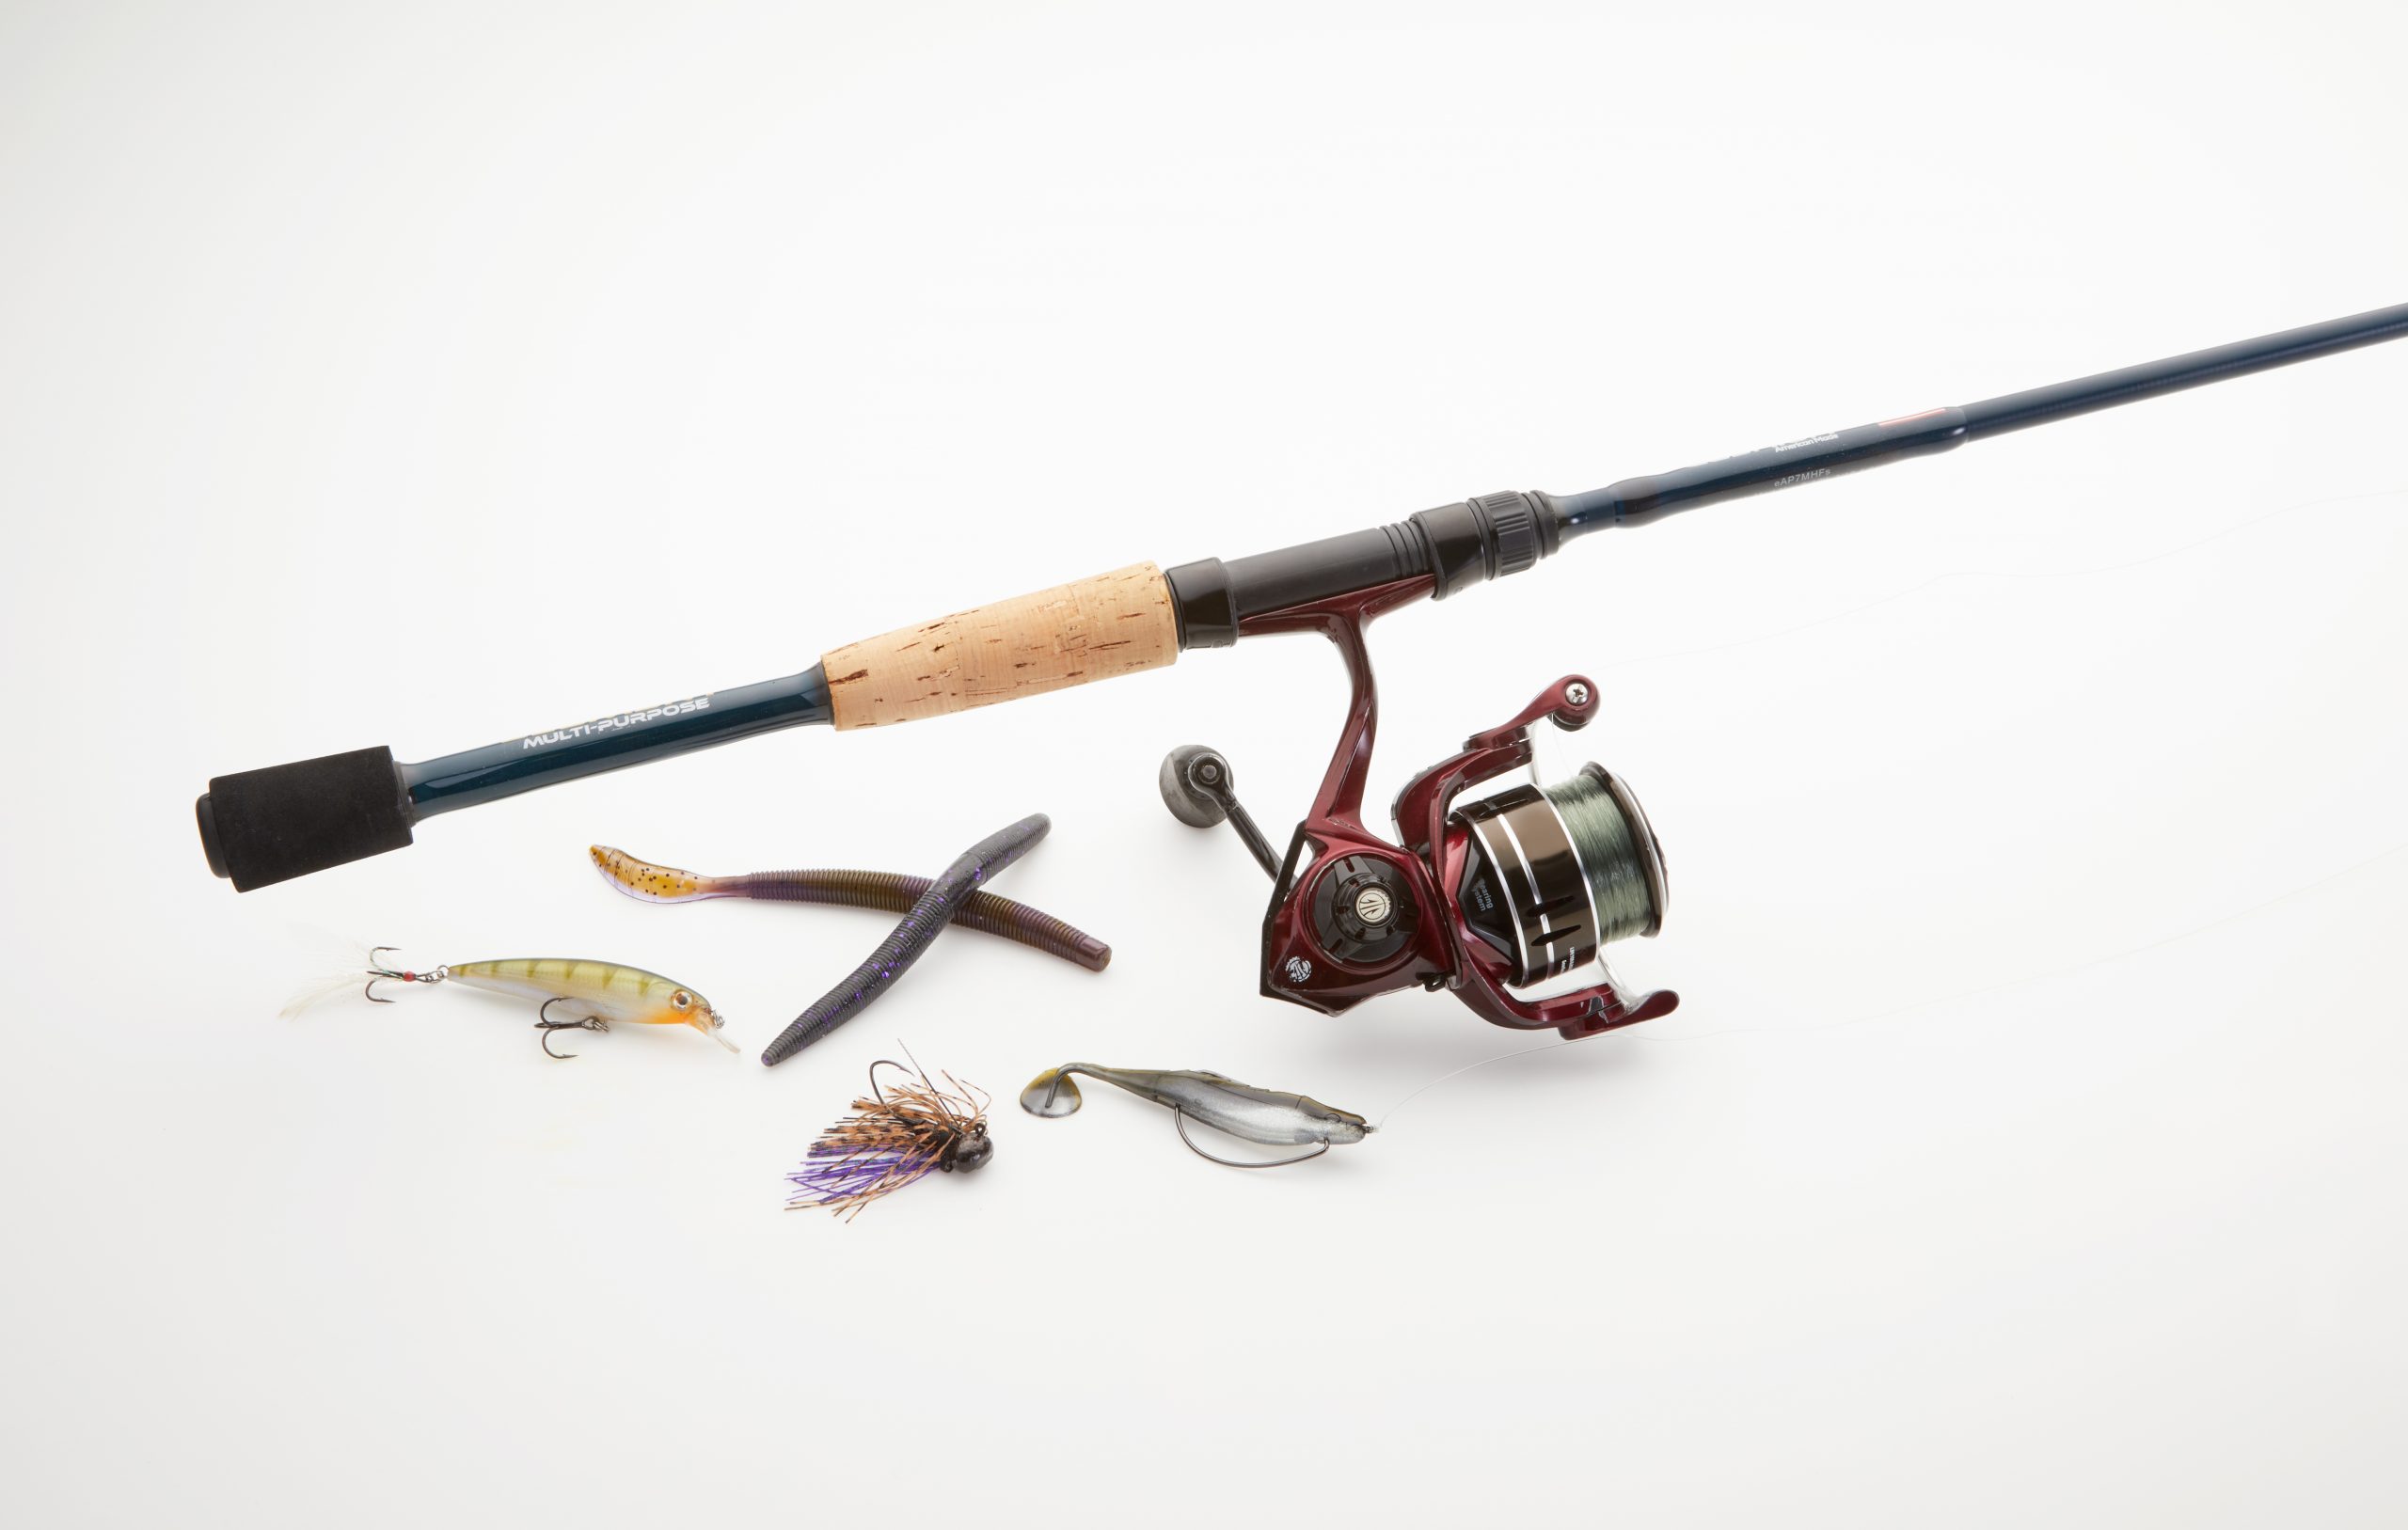 7' Fenwick Elite Tech Bass Medium Spinning Fishing Rod for sale online